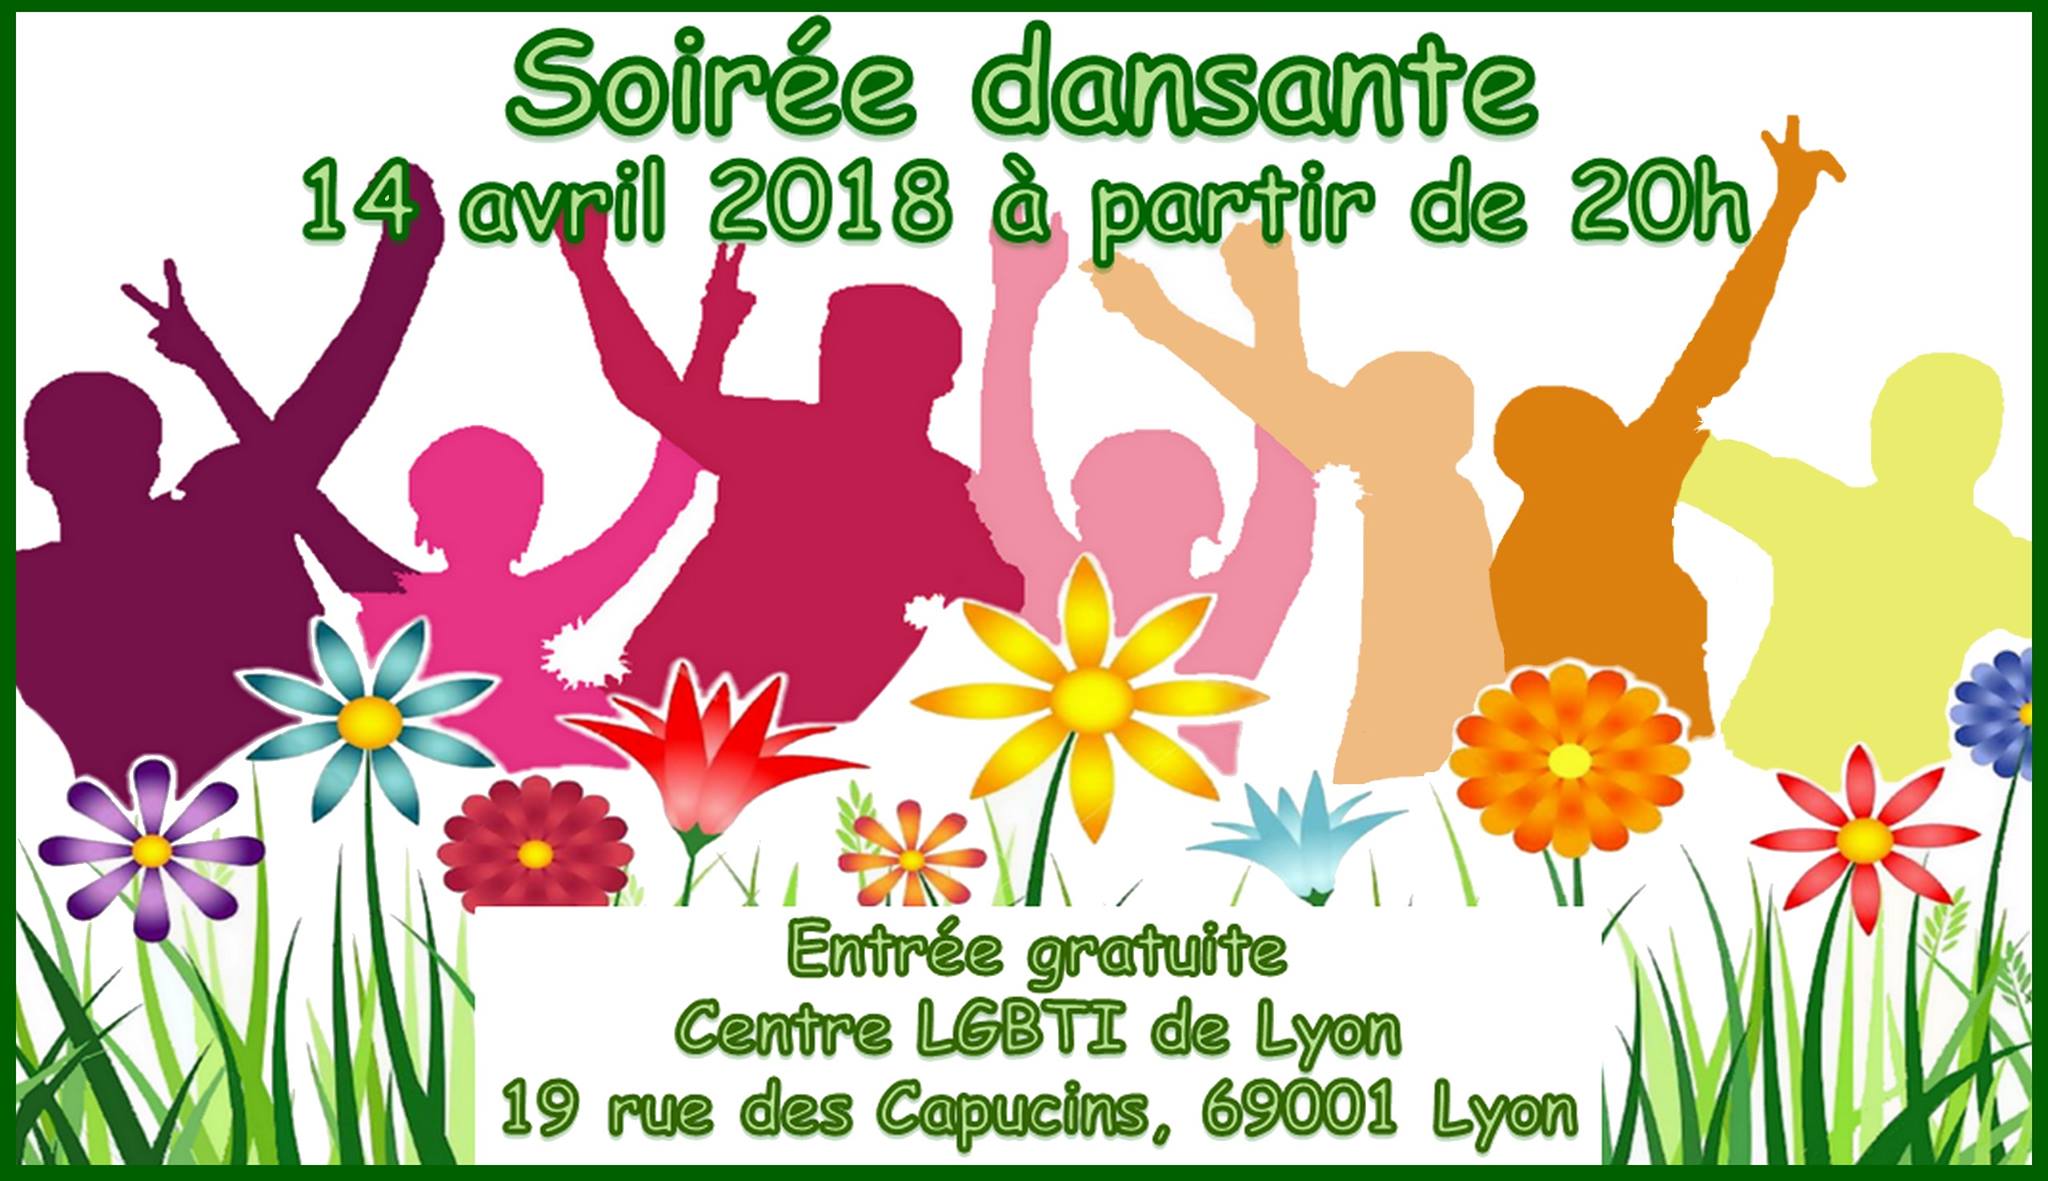 Rando’s Rhône-Alpes heteroclite Soirée dansante samedi 14 avril 2018 centre lgbti de lyon